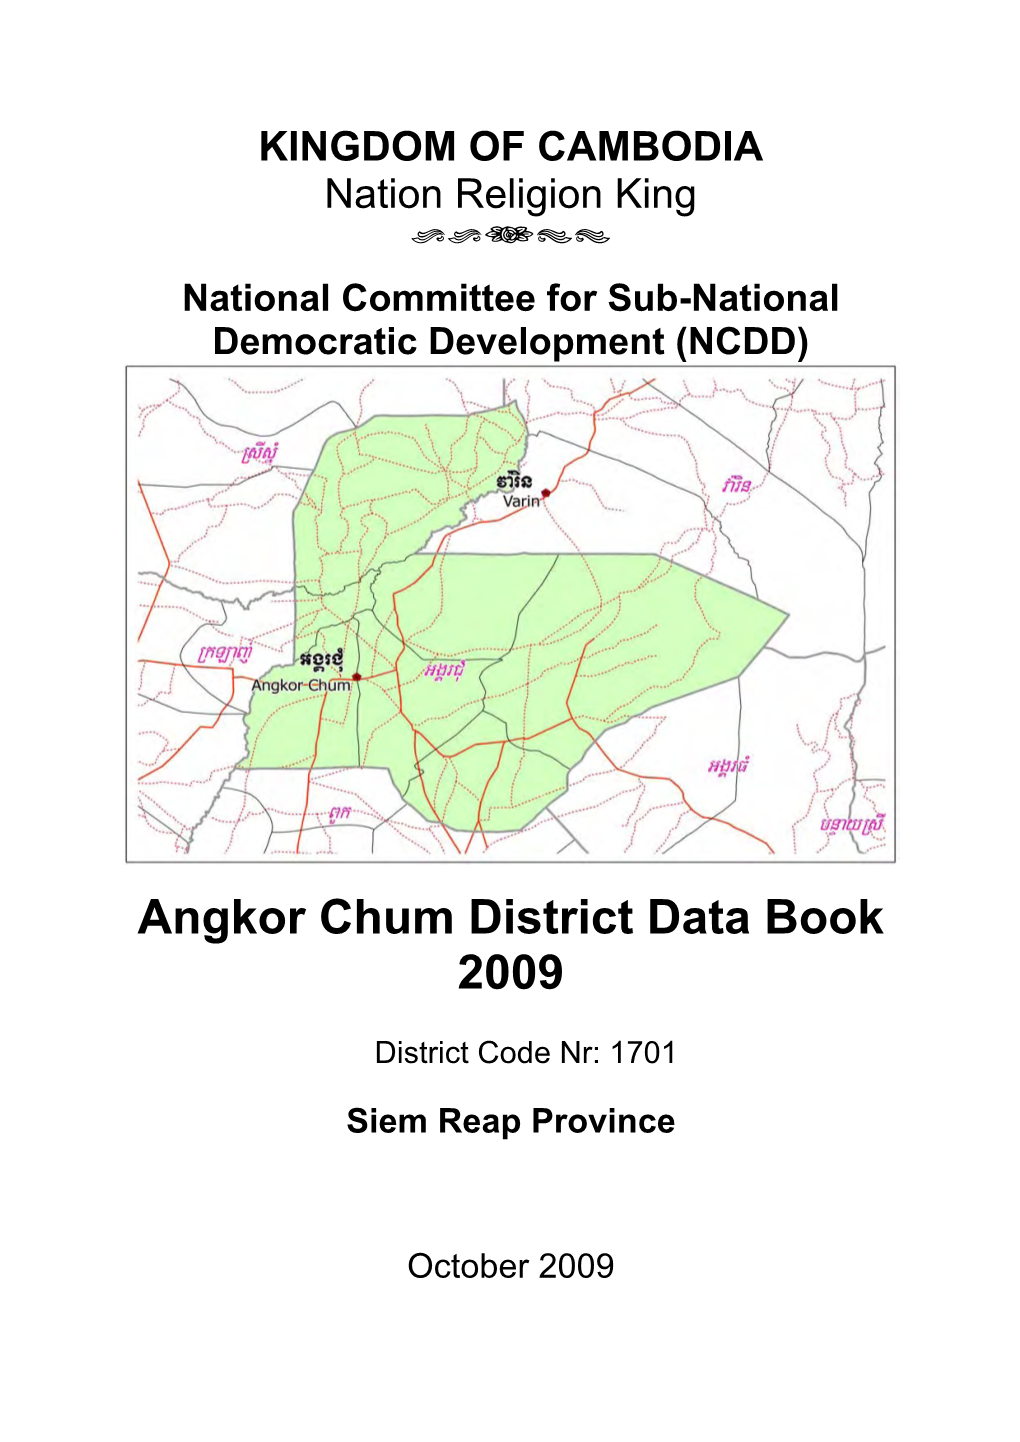 Angkor Chum District Data Book 2009